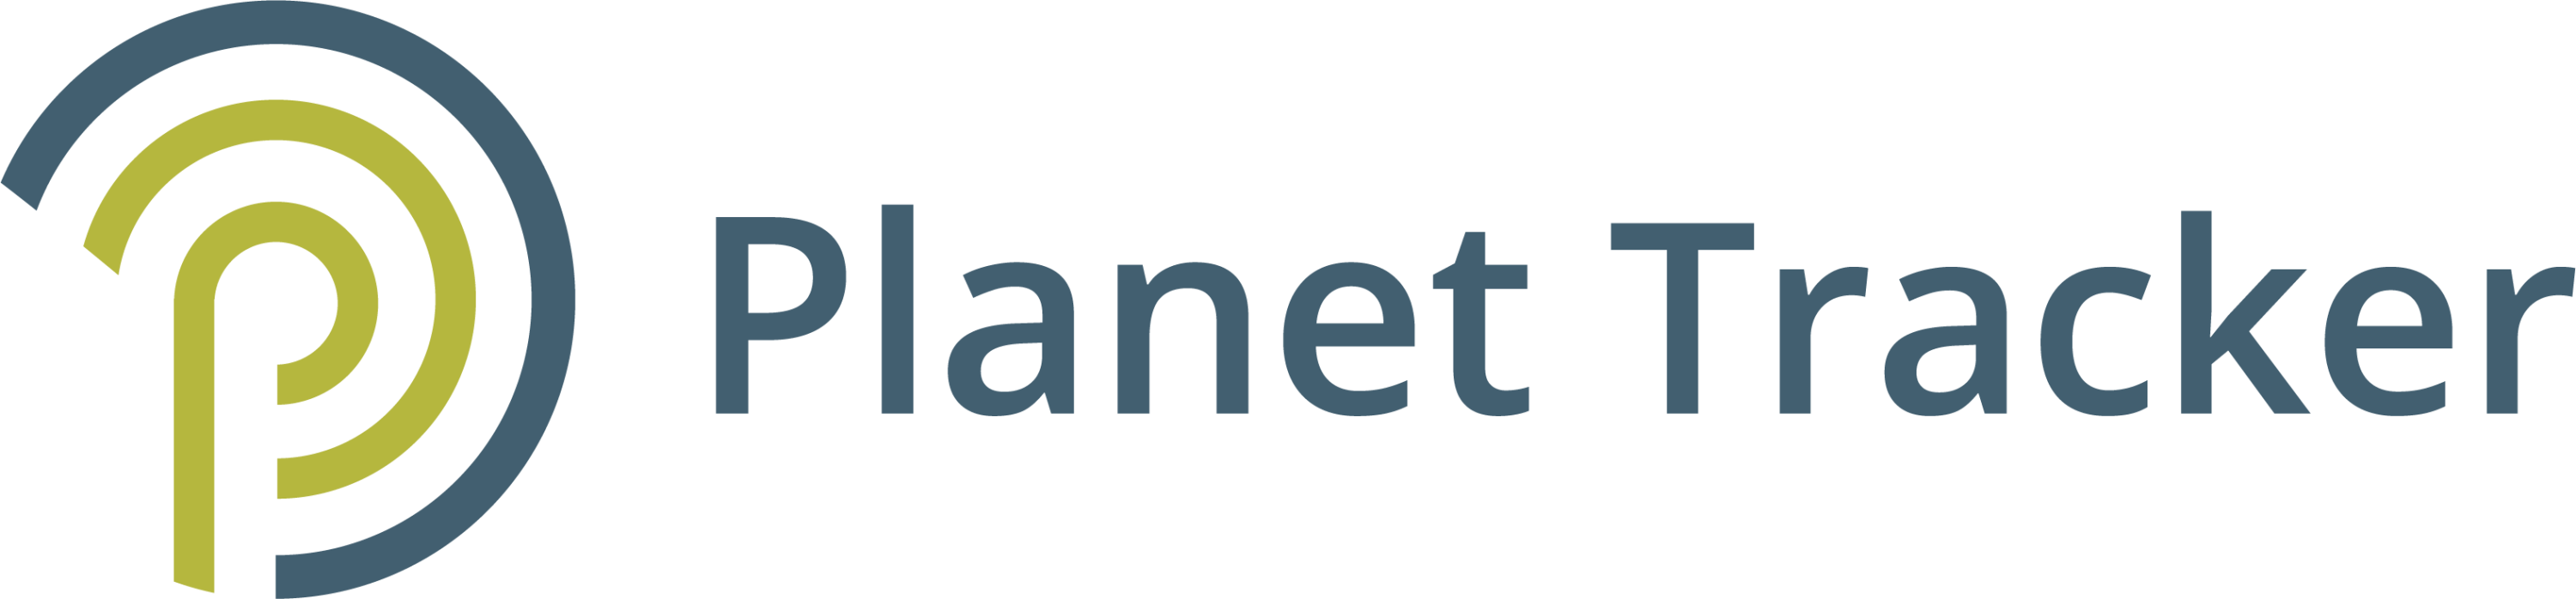 Planet Tracker logo